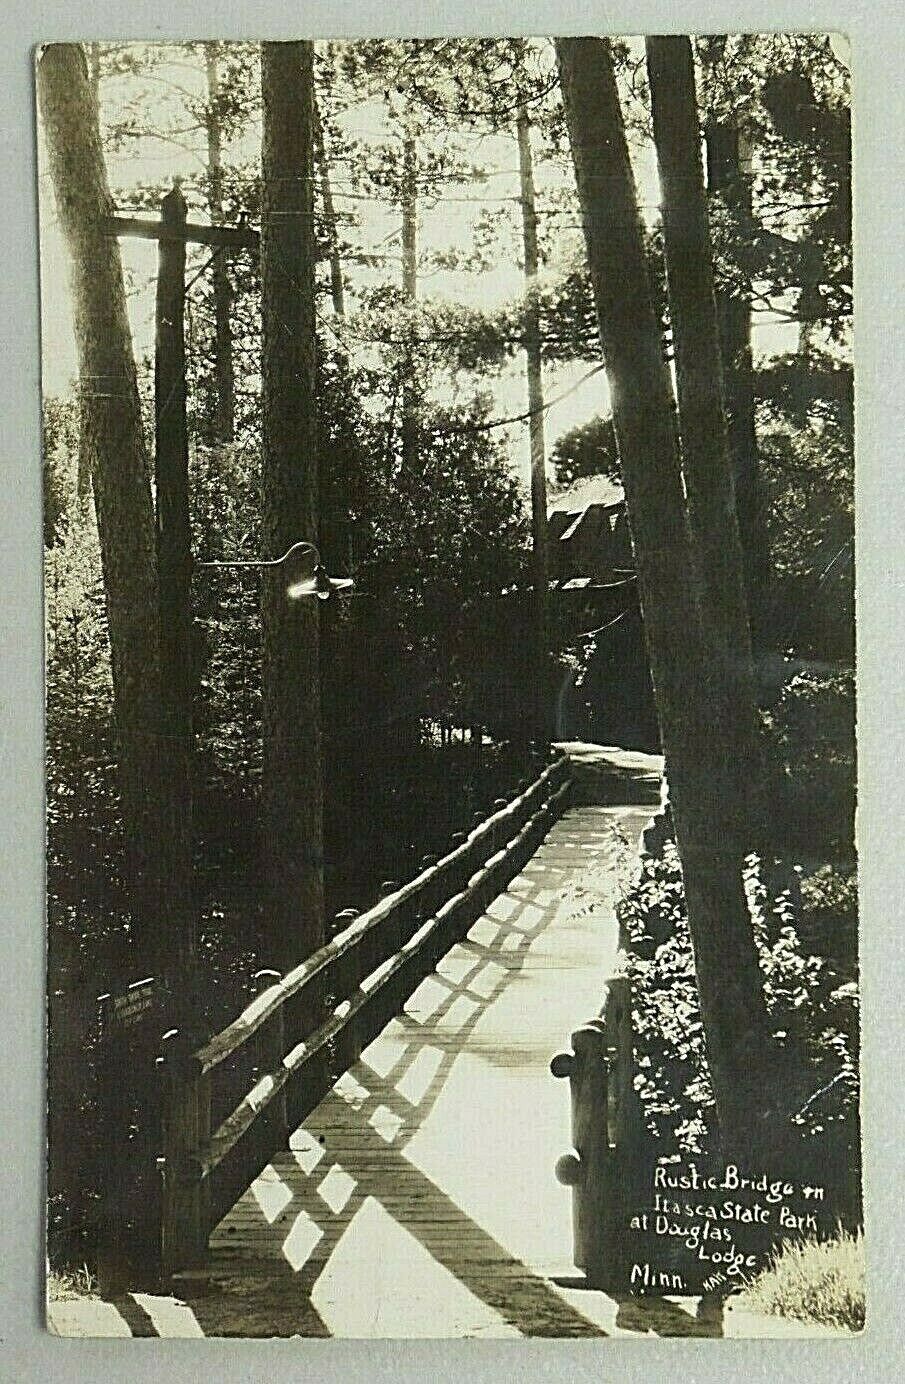 Rustic Bridge Itasca State Park Douglas Lodge Minnesota 1940 RPPC Postcard 5181